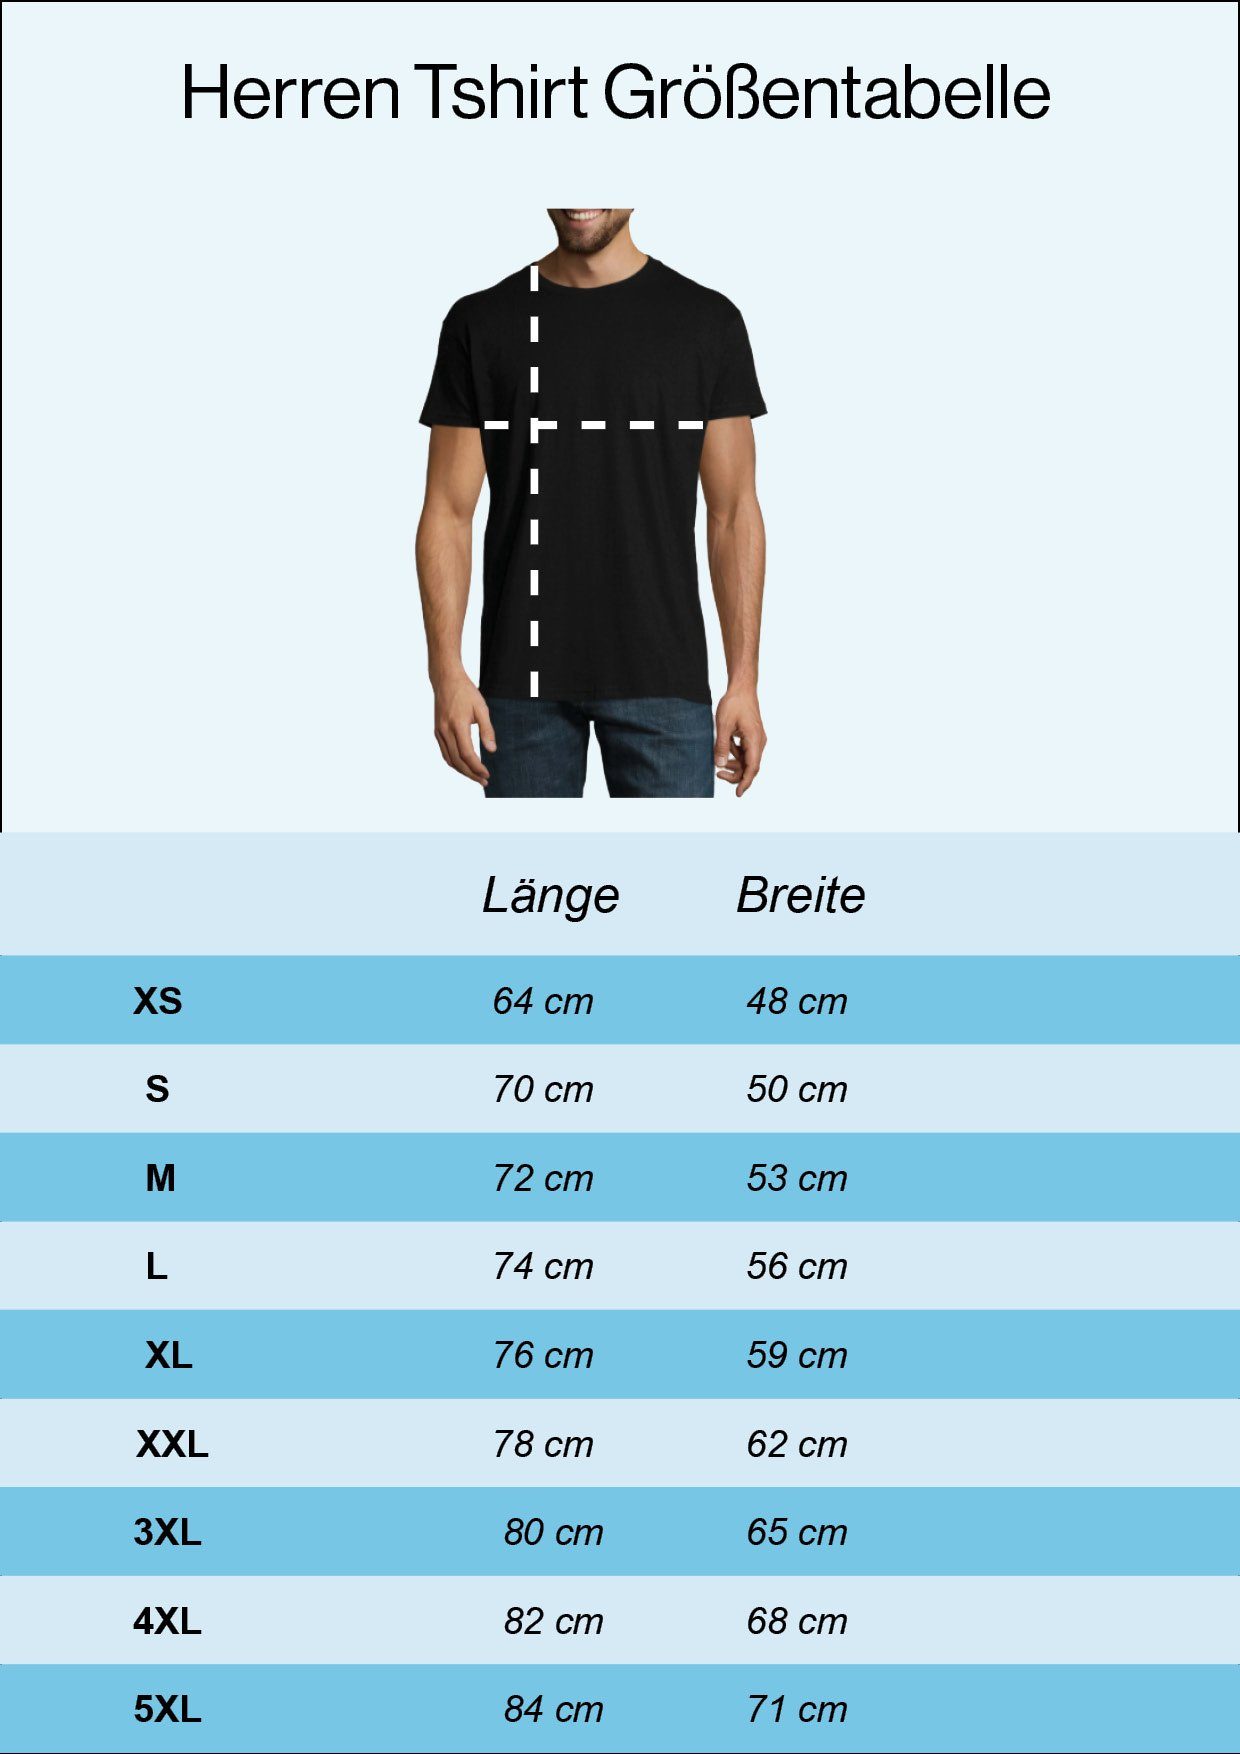 Poke Ball trendigem T-Shirt Youth Grau Designz Herren T-Shirt Frontprint Stern mit